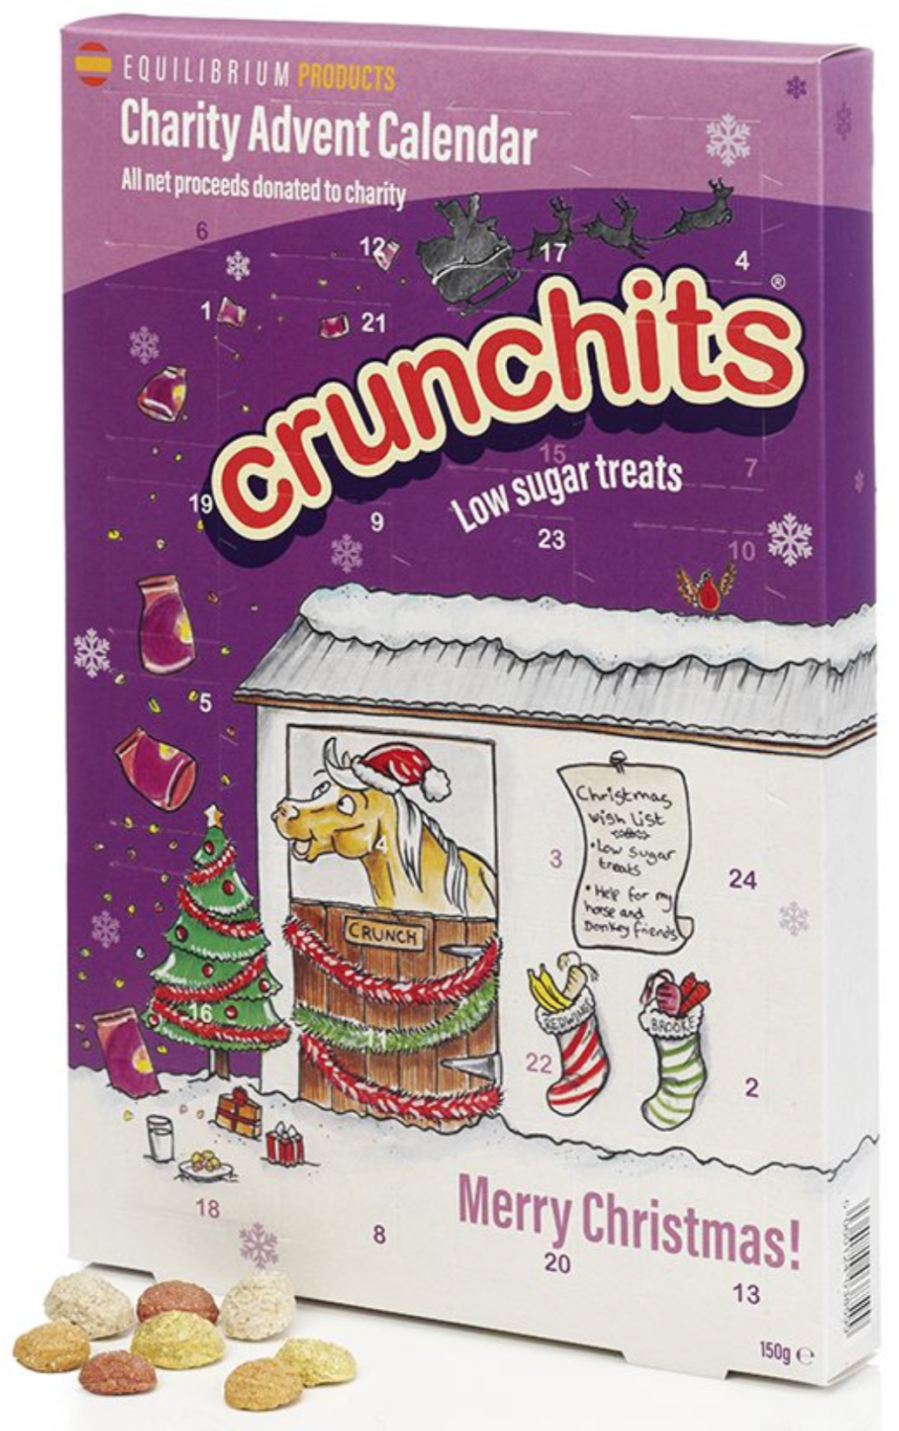 Crunchits Christmas Charity Advent Calendar